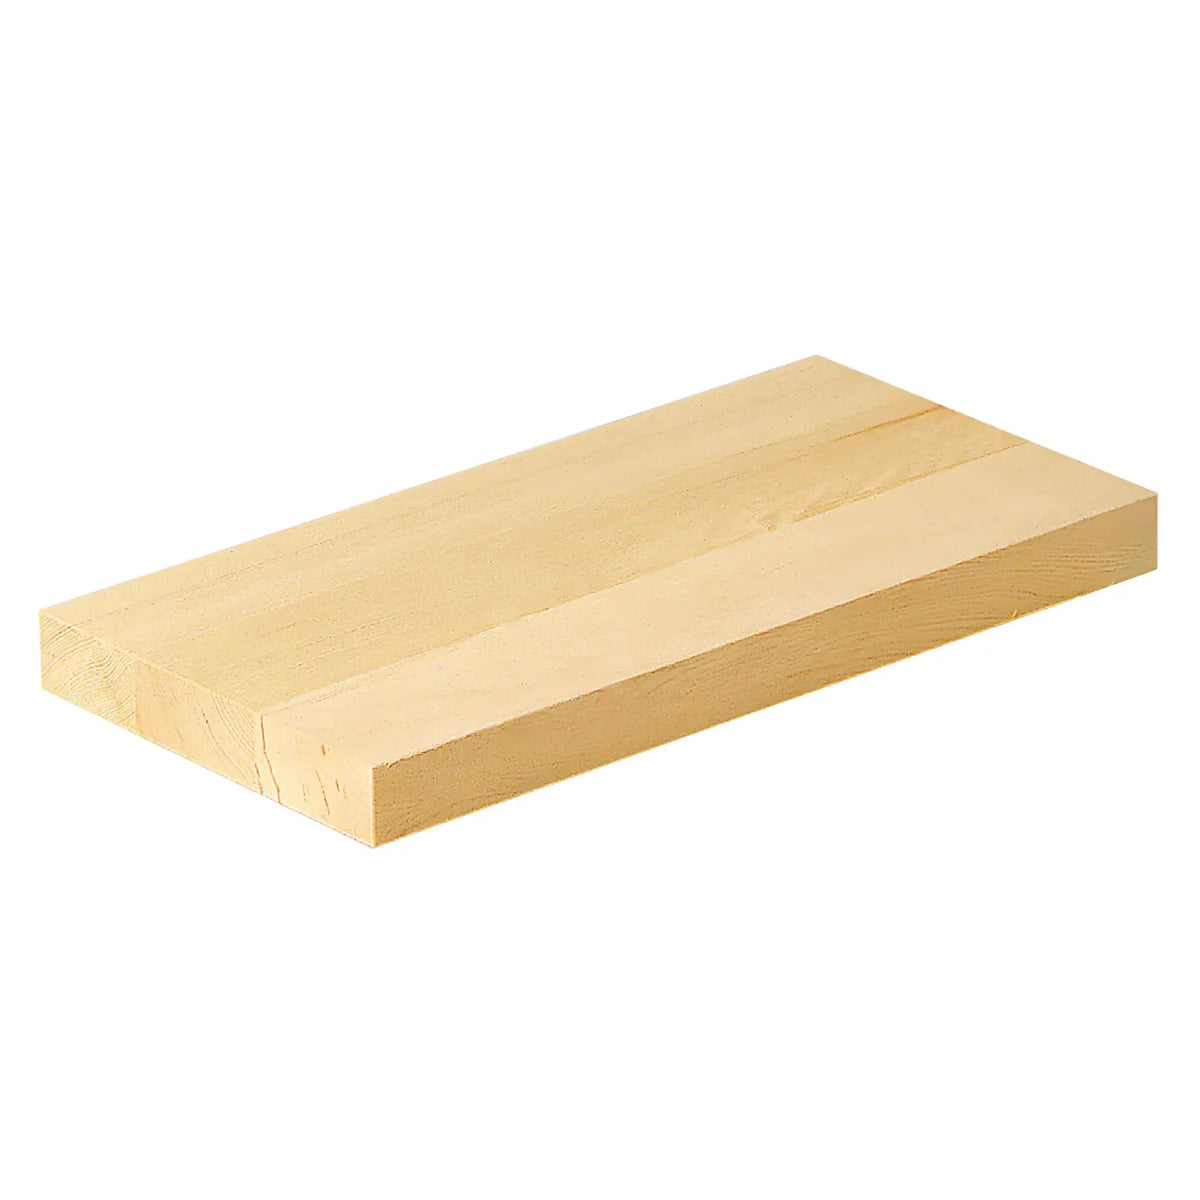 Yamacoh Hinoki Cypress Wooden Cutting Board